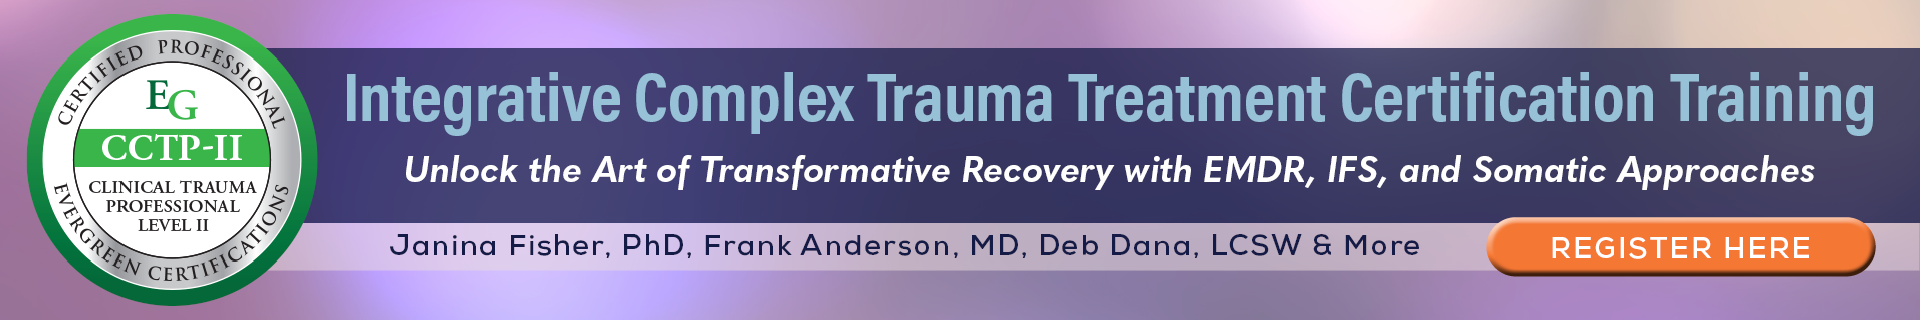 Integrative Complex Trauma Treatment Certification Training